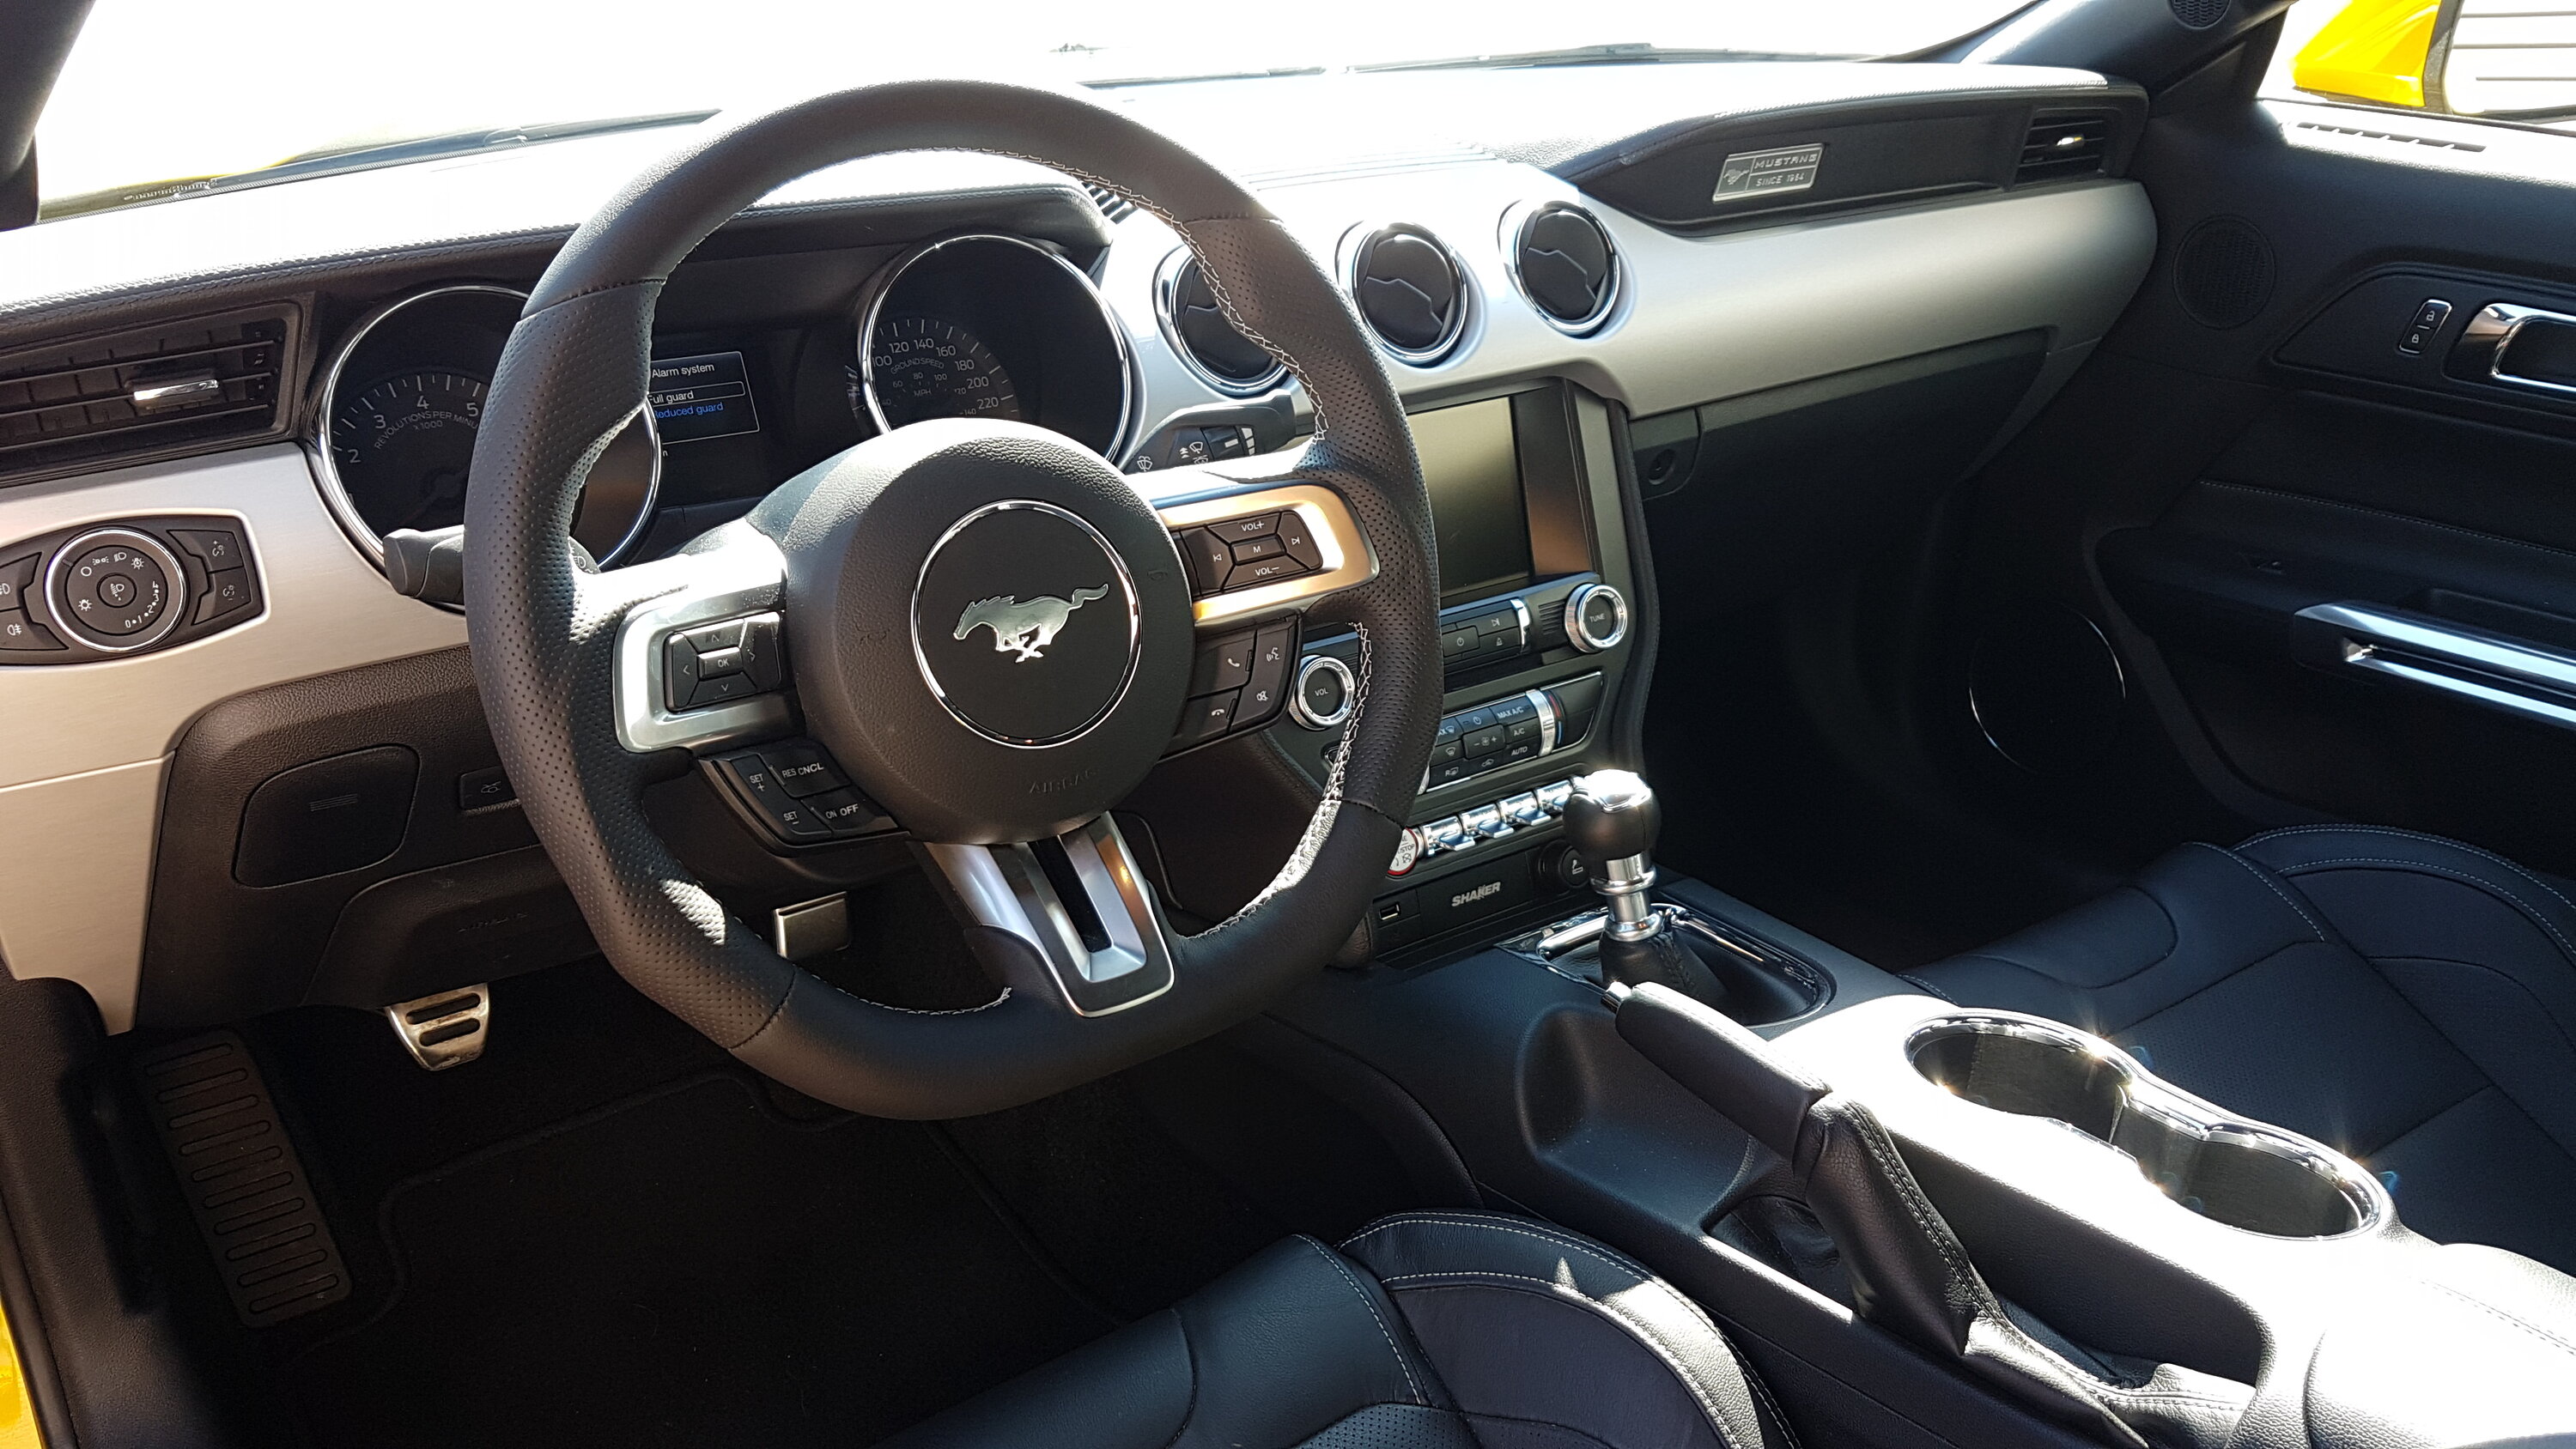 S650 Mustang S650 Mustang Interior Hands-On Review: More Digital, Plus a Drift Handbrake! [Motortrend] 2018050519